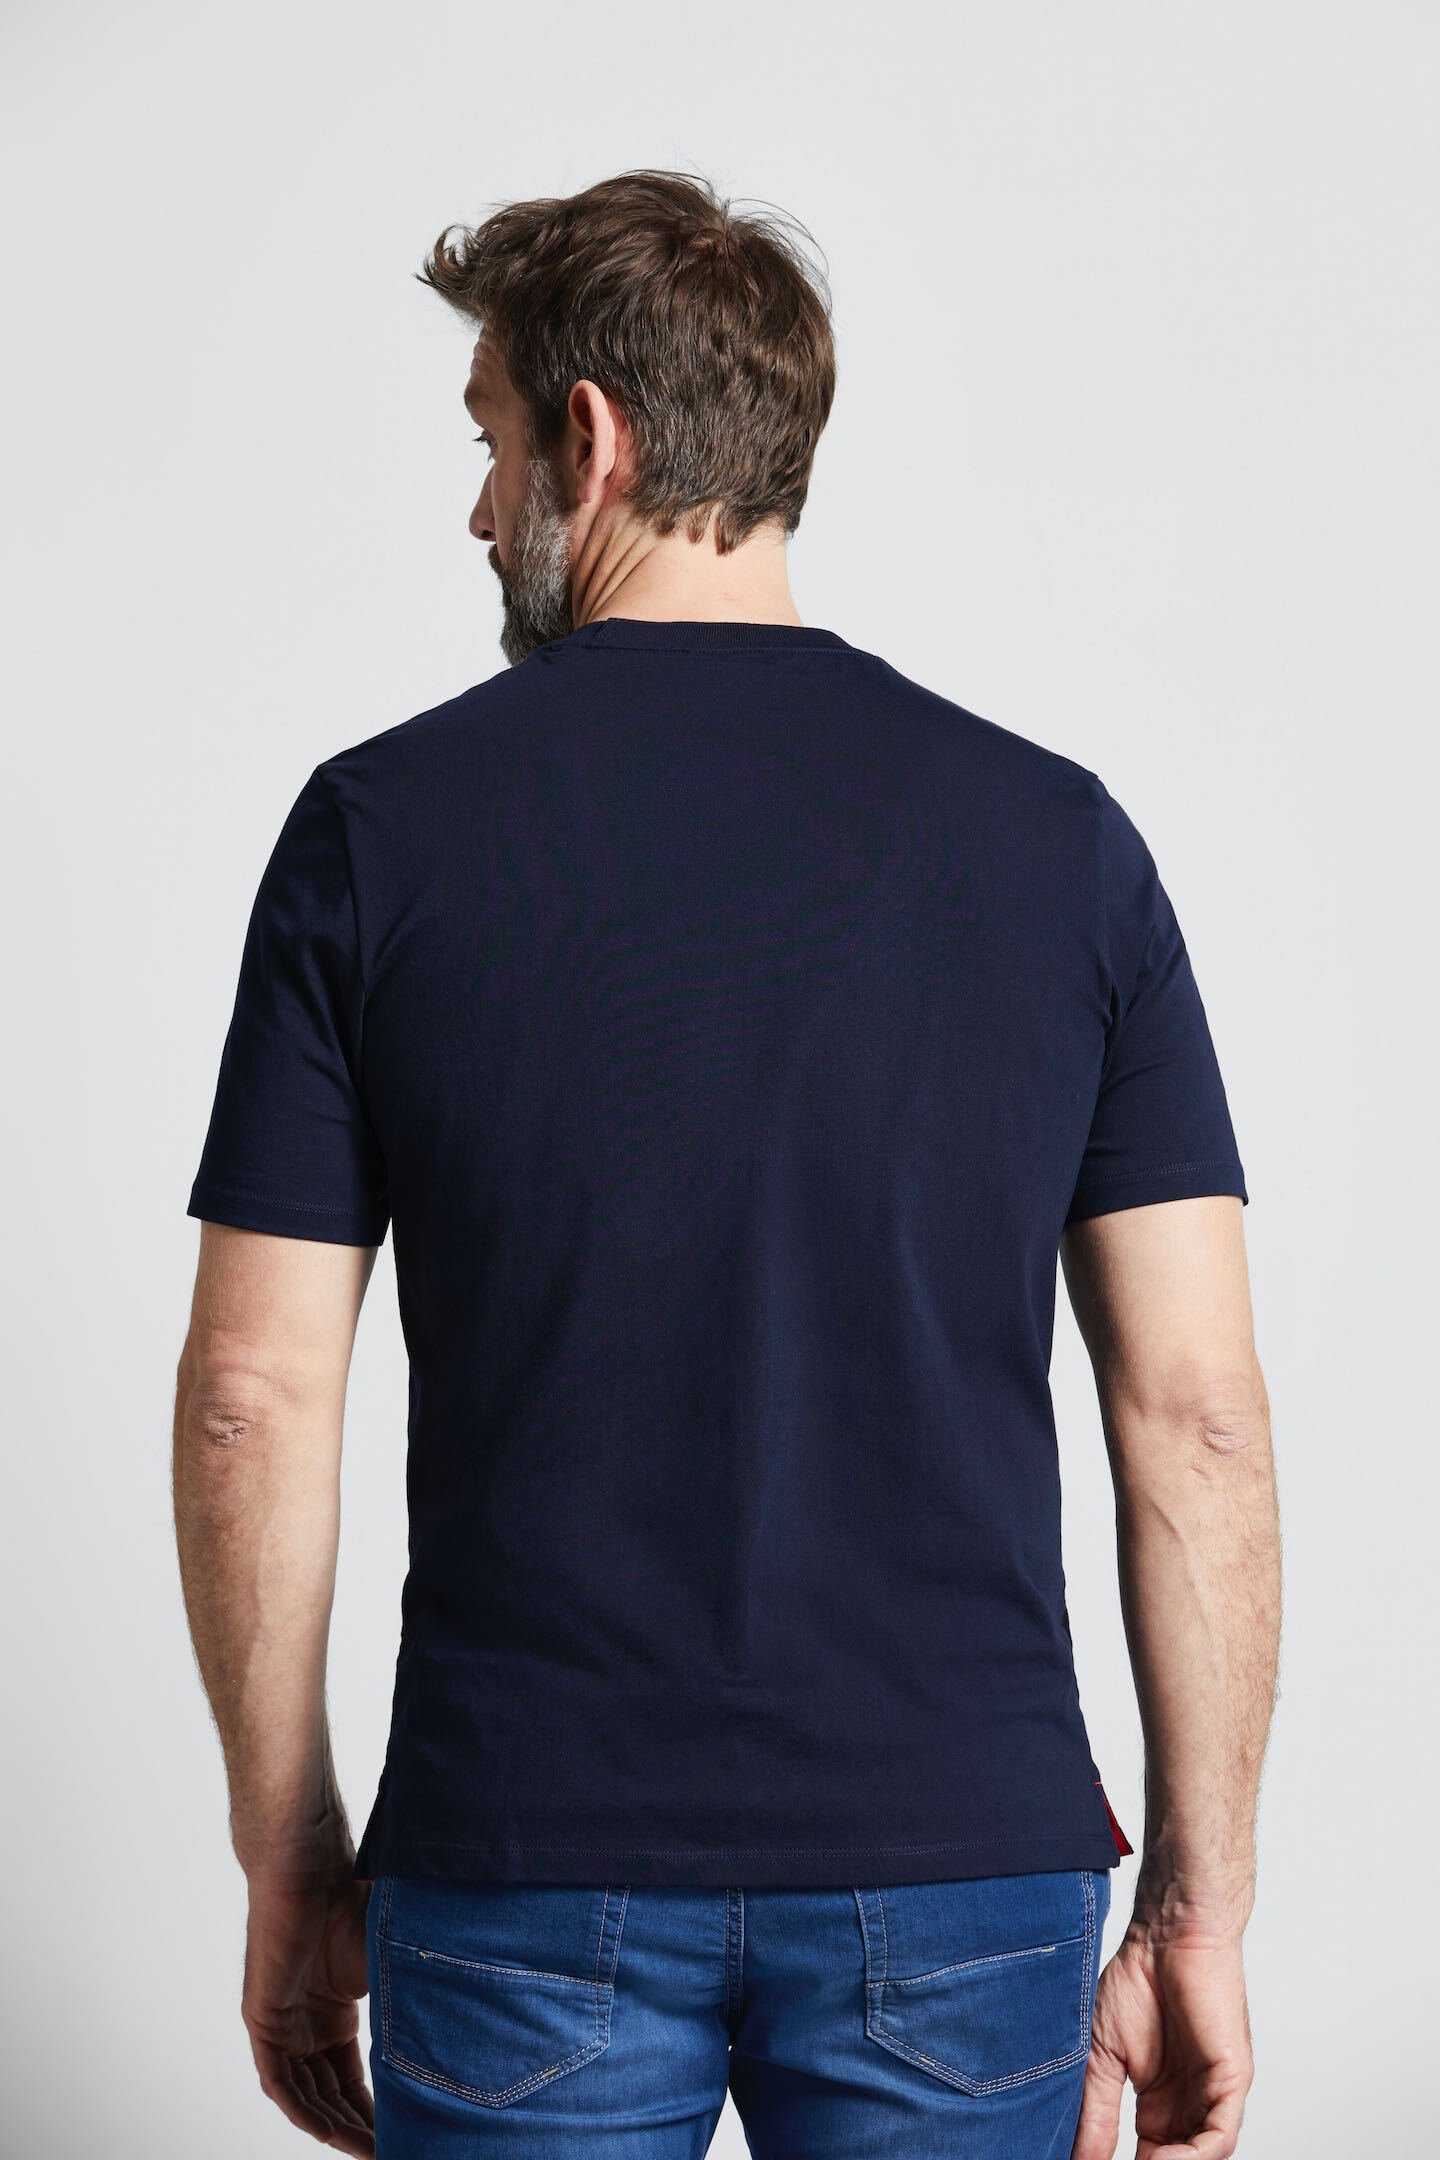 mit Logo-Print großem marine bugatti T-Shirt